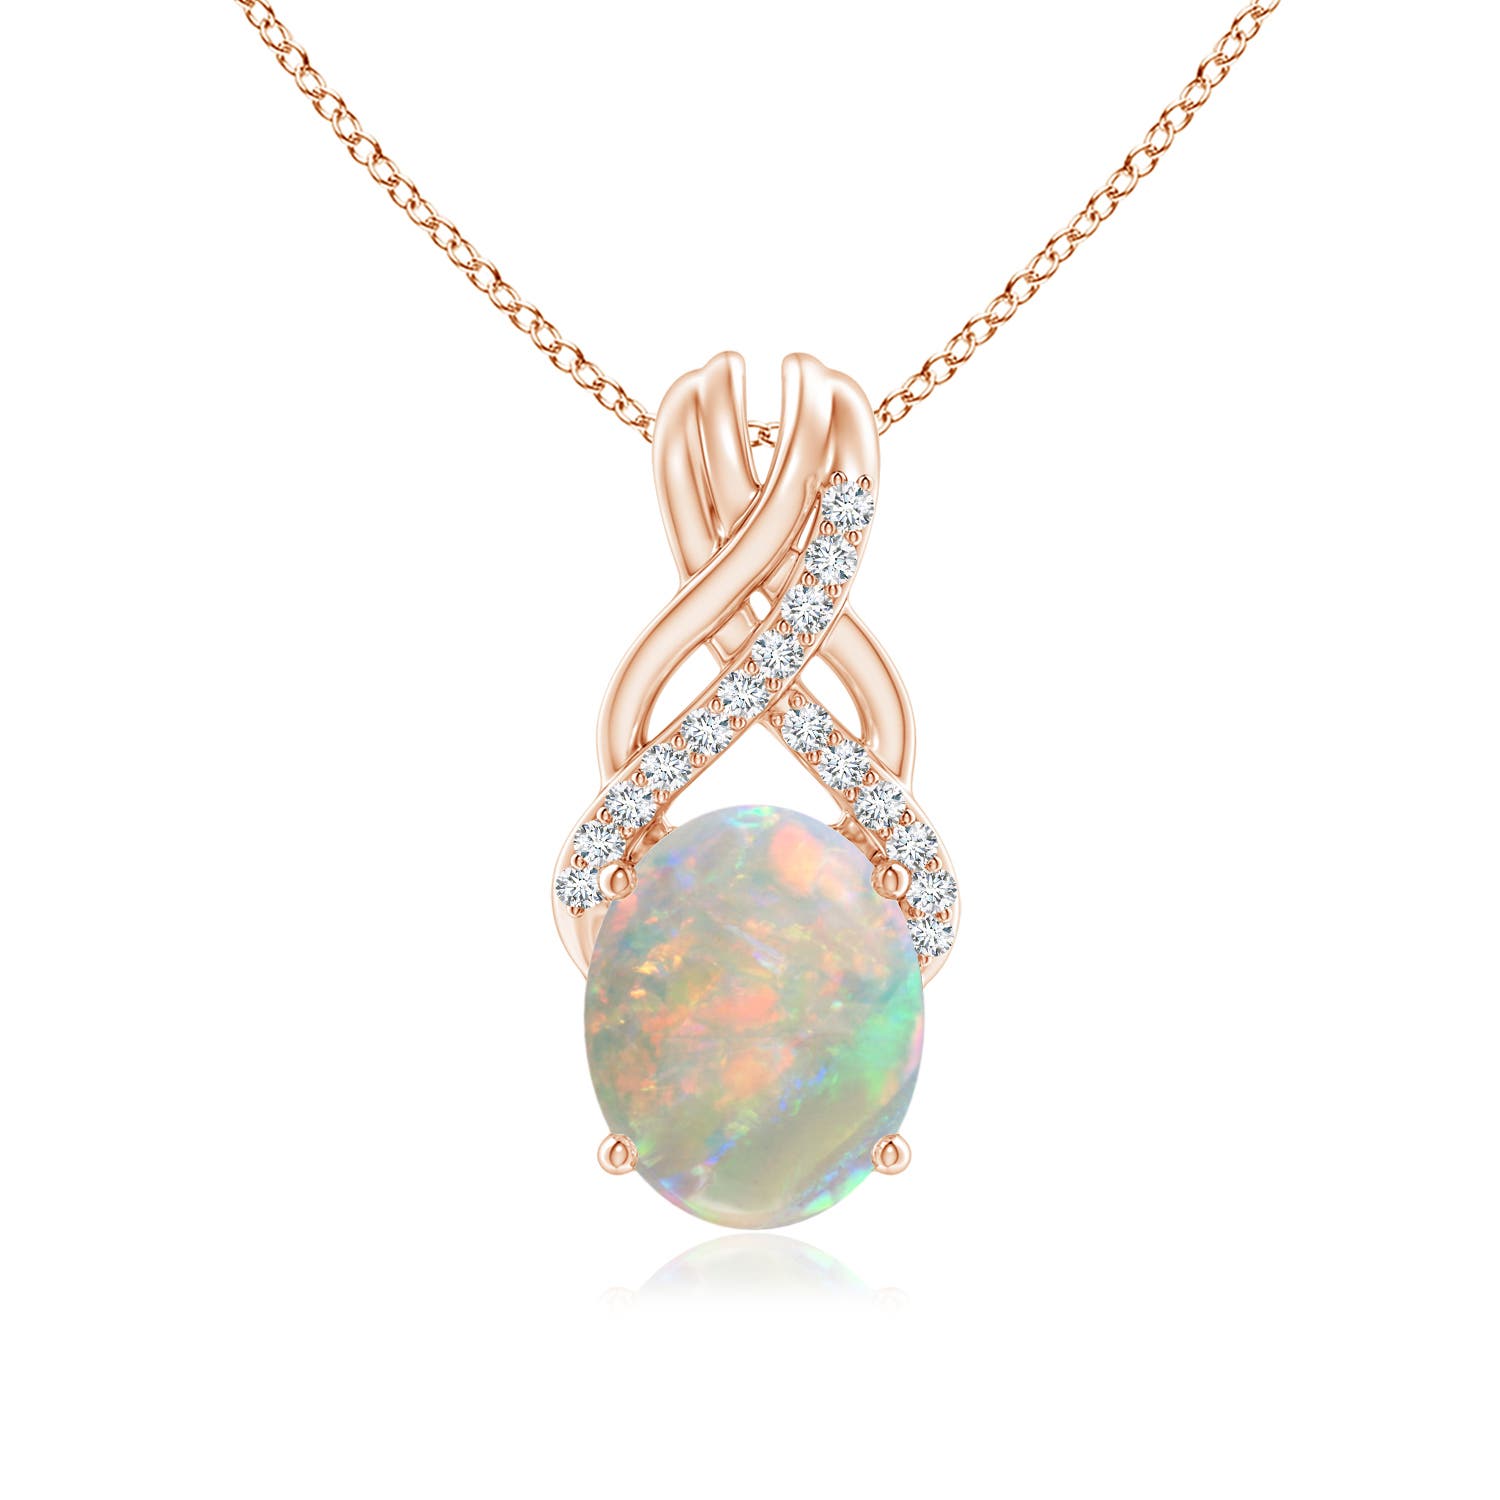 Shop Opal Pendant Necklaces for Women | Angara